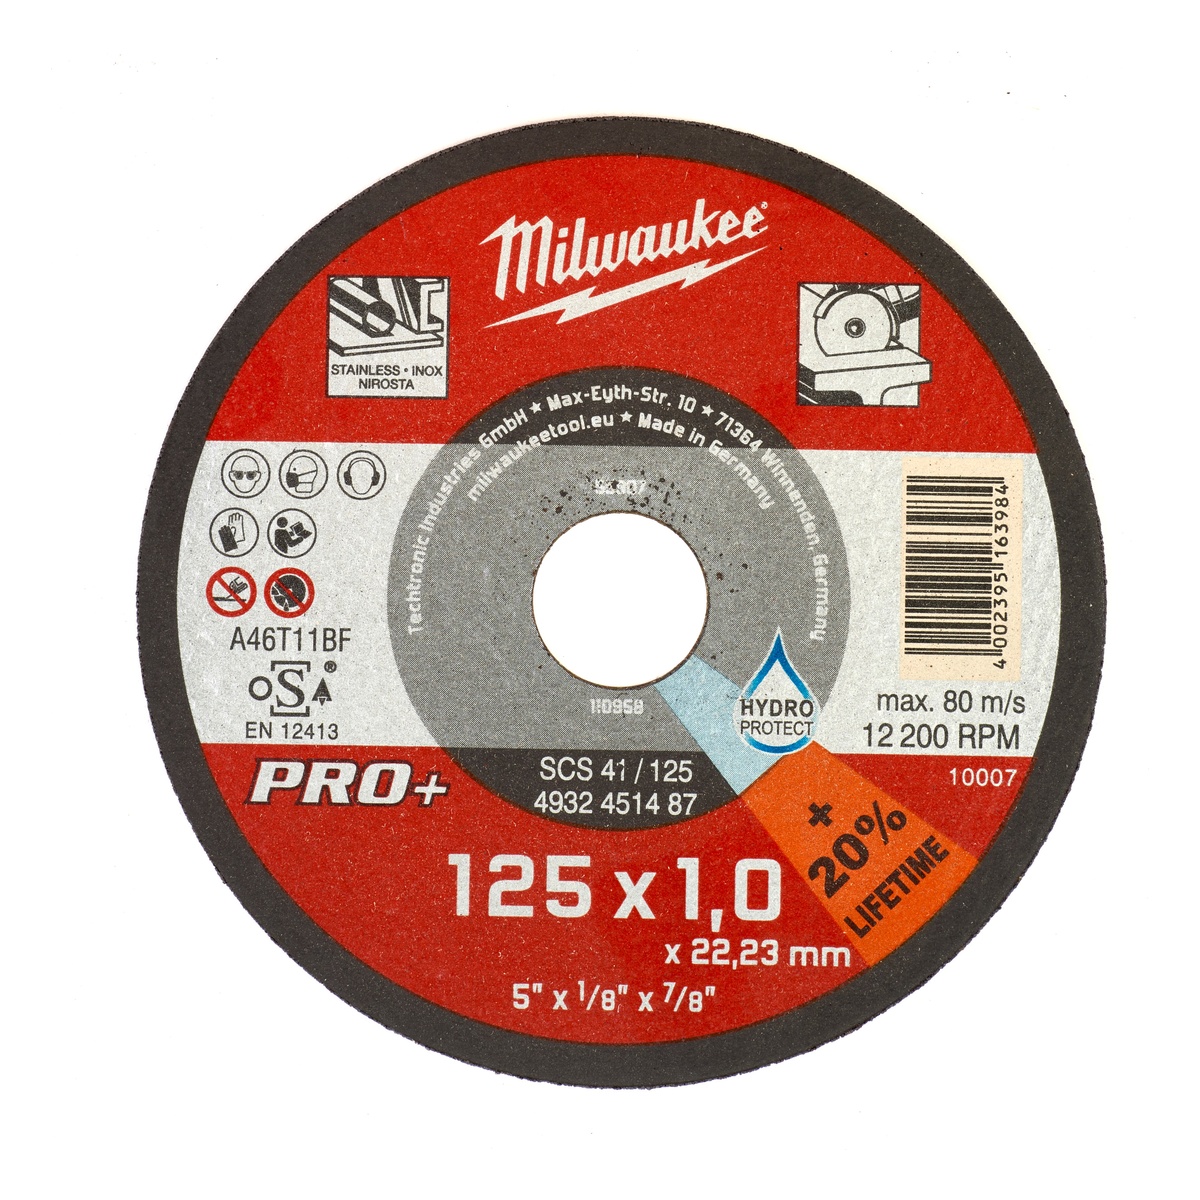 Milwaukee Metalltrennscheibe PRO+ INOX 125 mm SCS41 1 mm - 1 Stk.